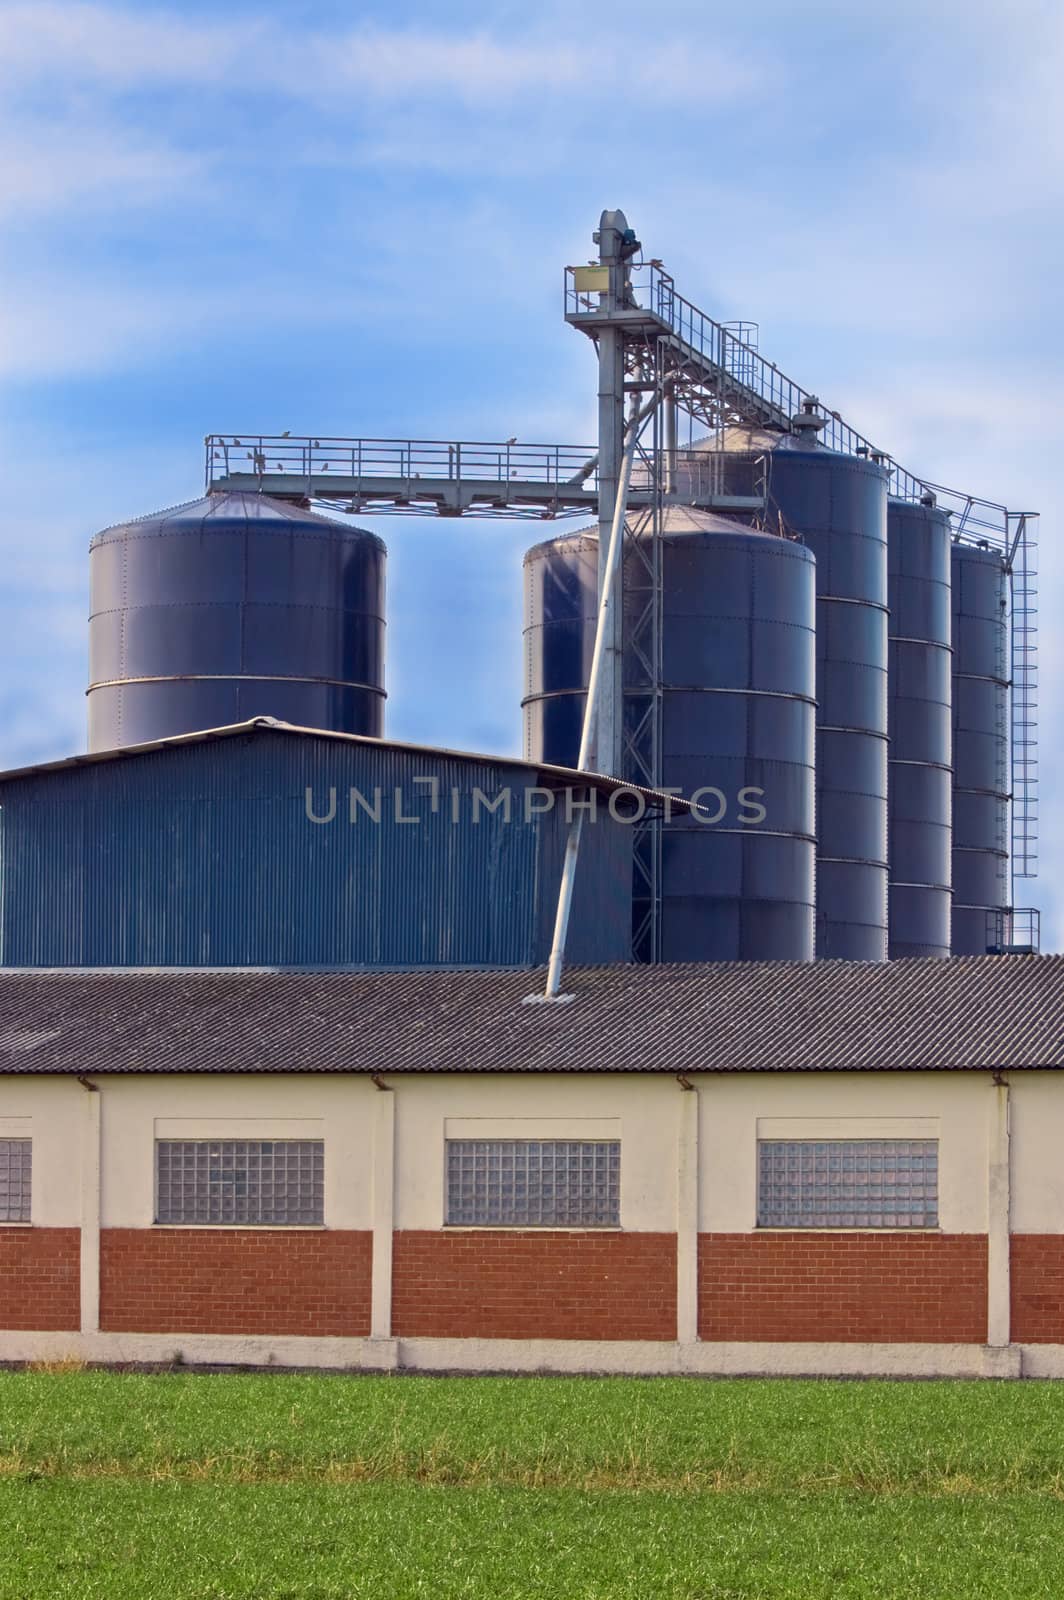 Storage silos in a stock farm